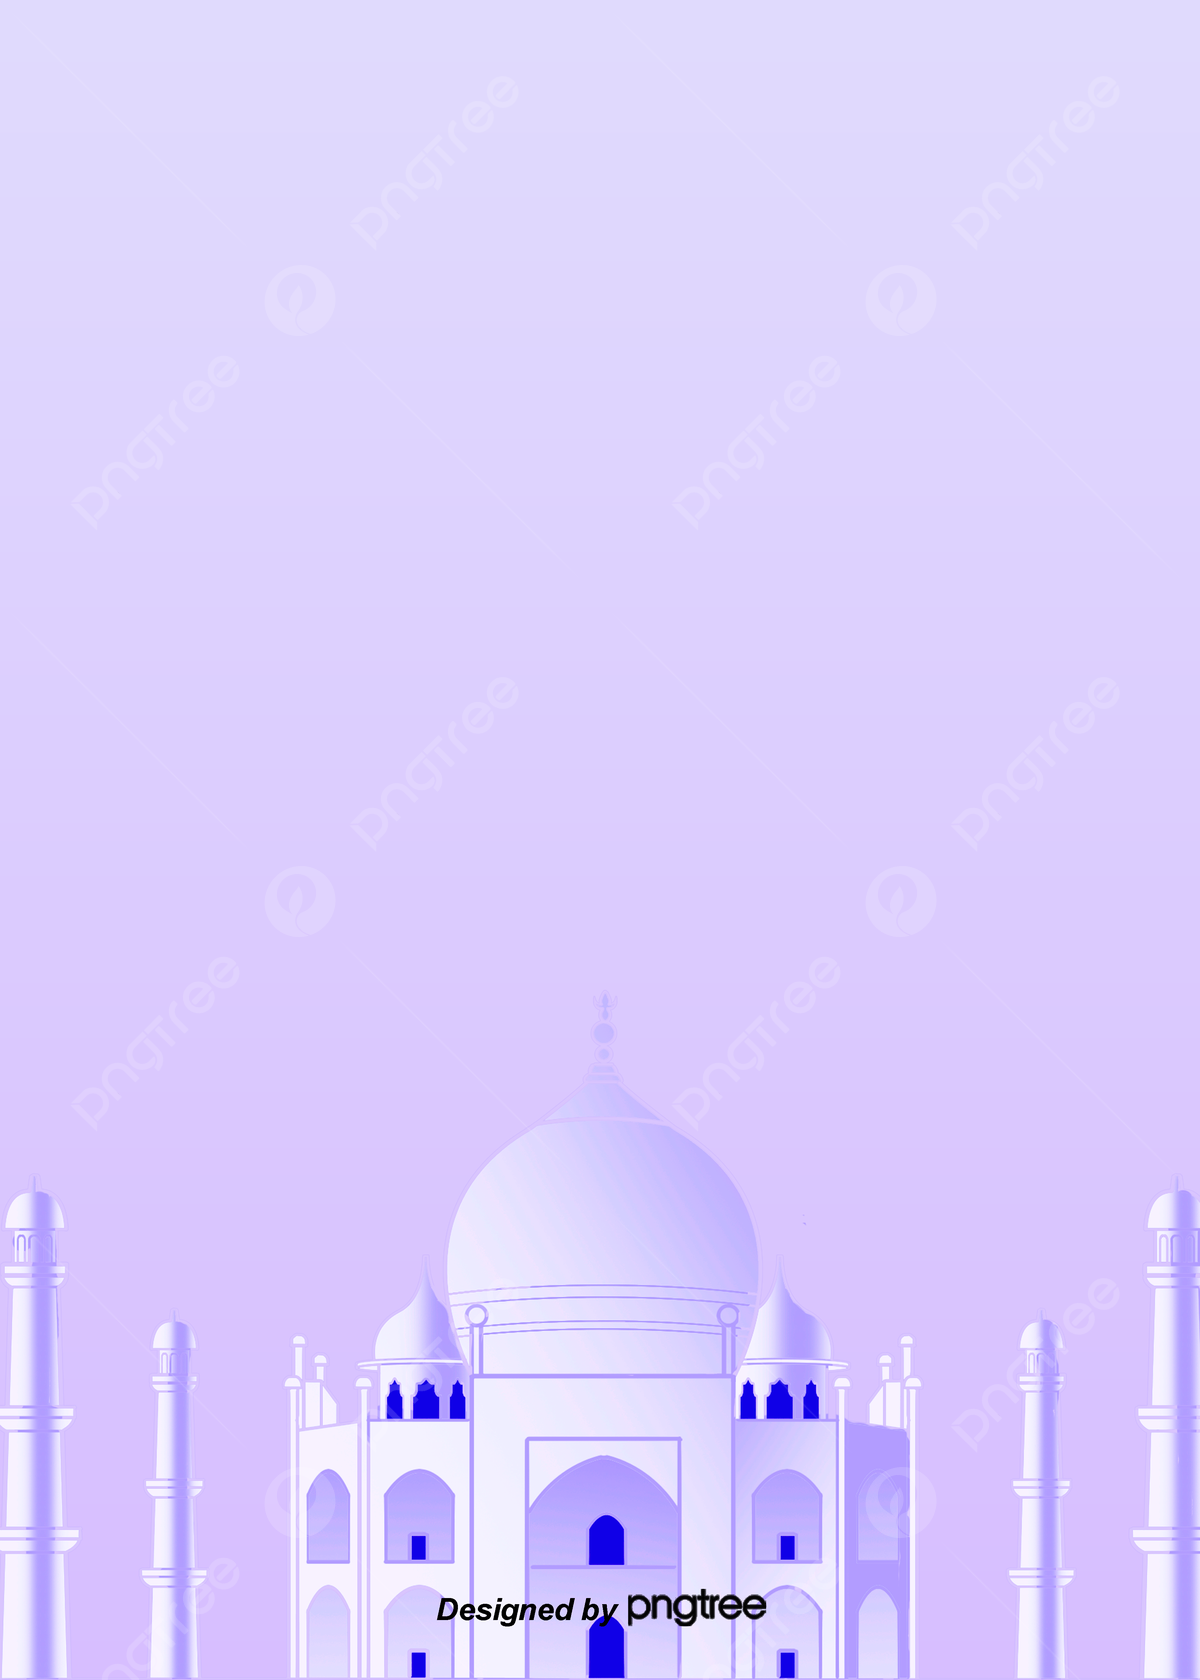  Indien Hintergrundbild 1200x1680. Simple Purple Gradual Fresh Indian Taj Mahal Aesthetic Background Wallpaper Image For Free Download